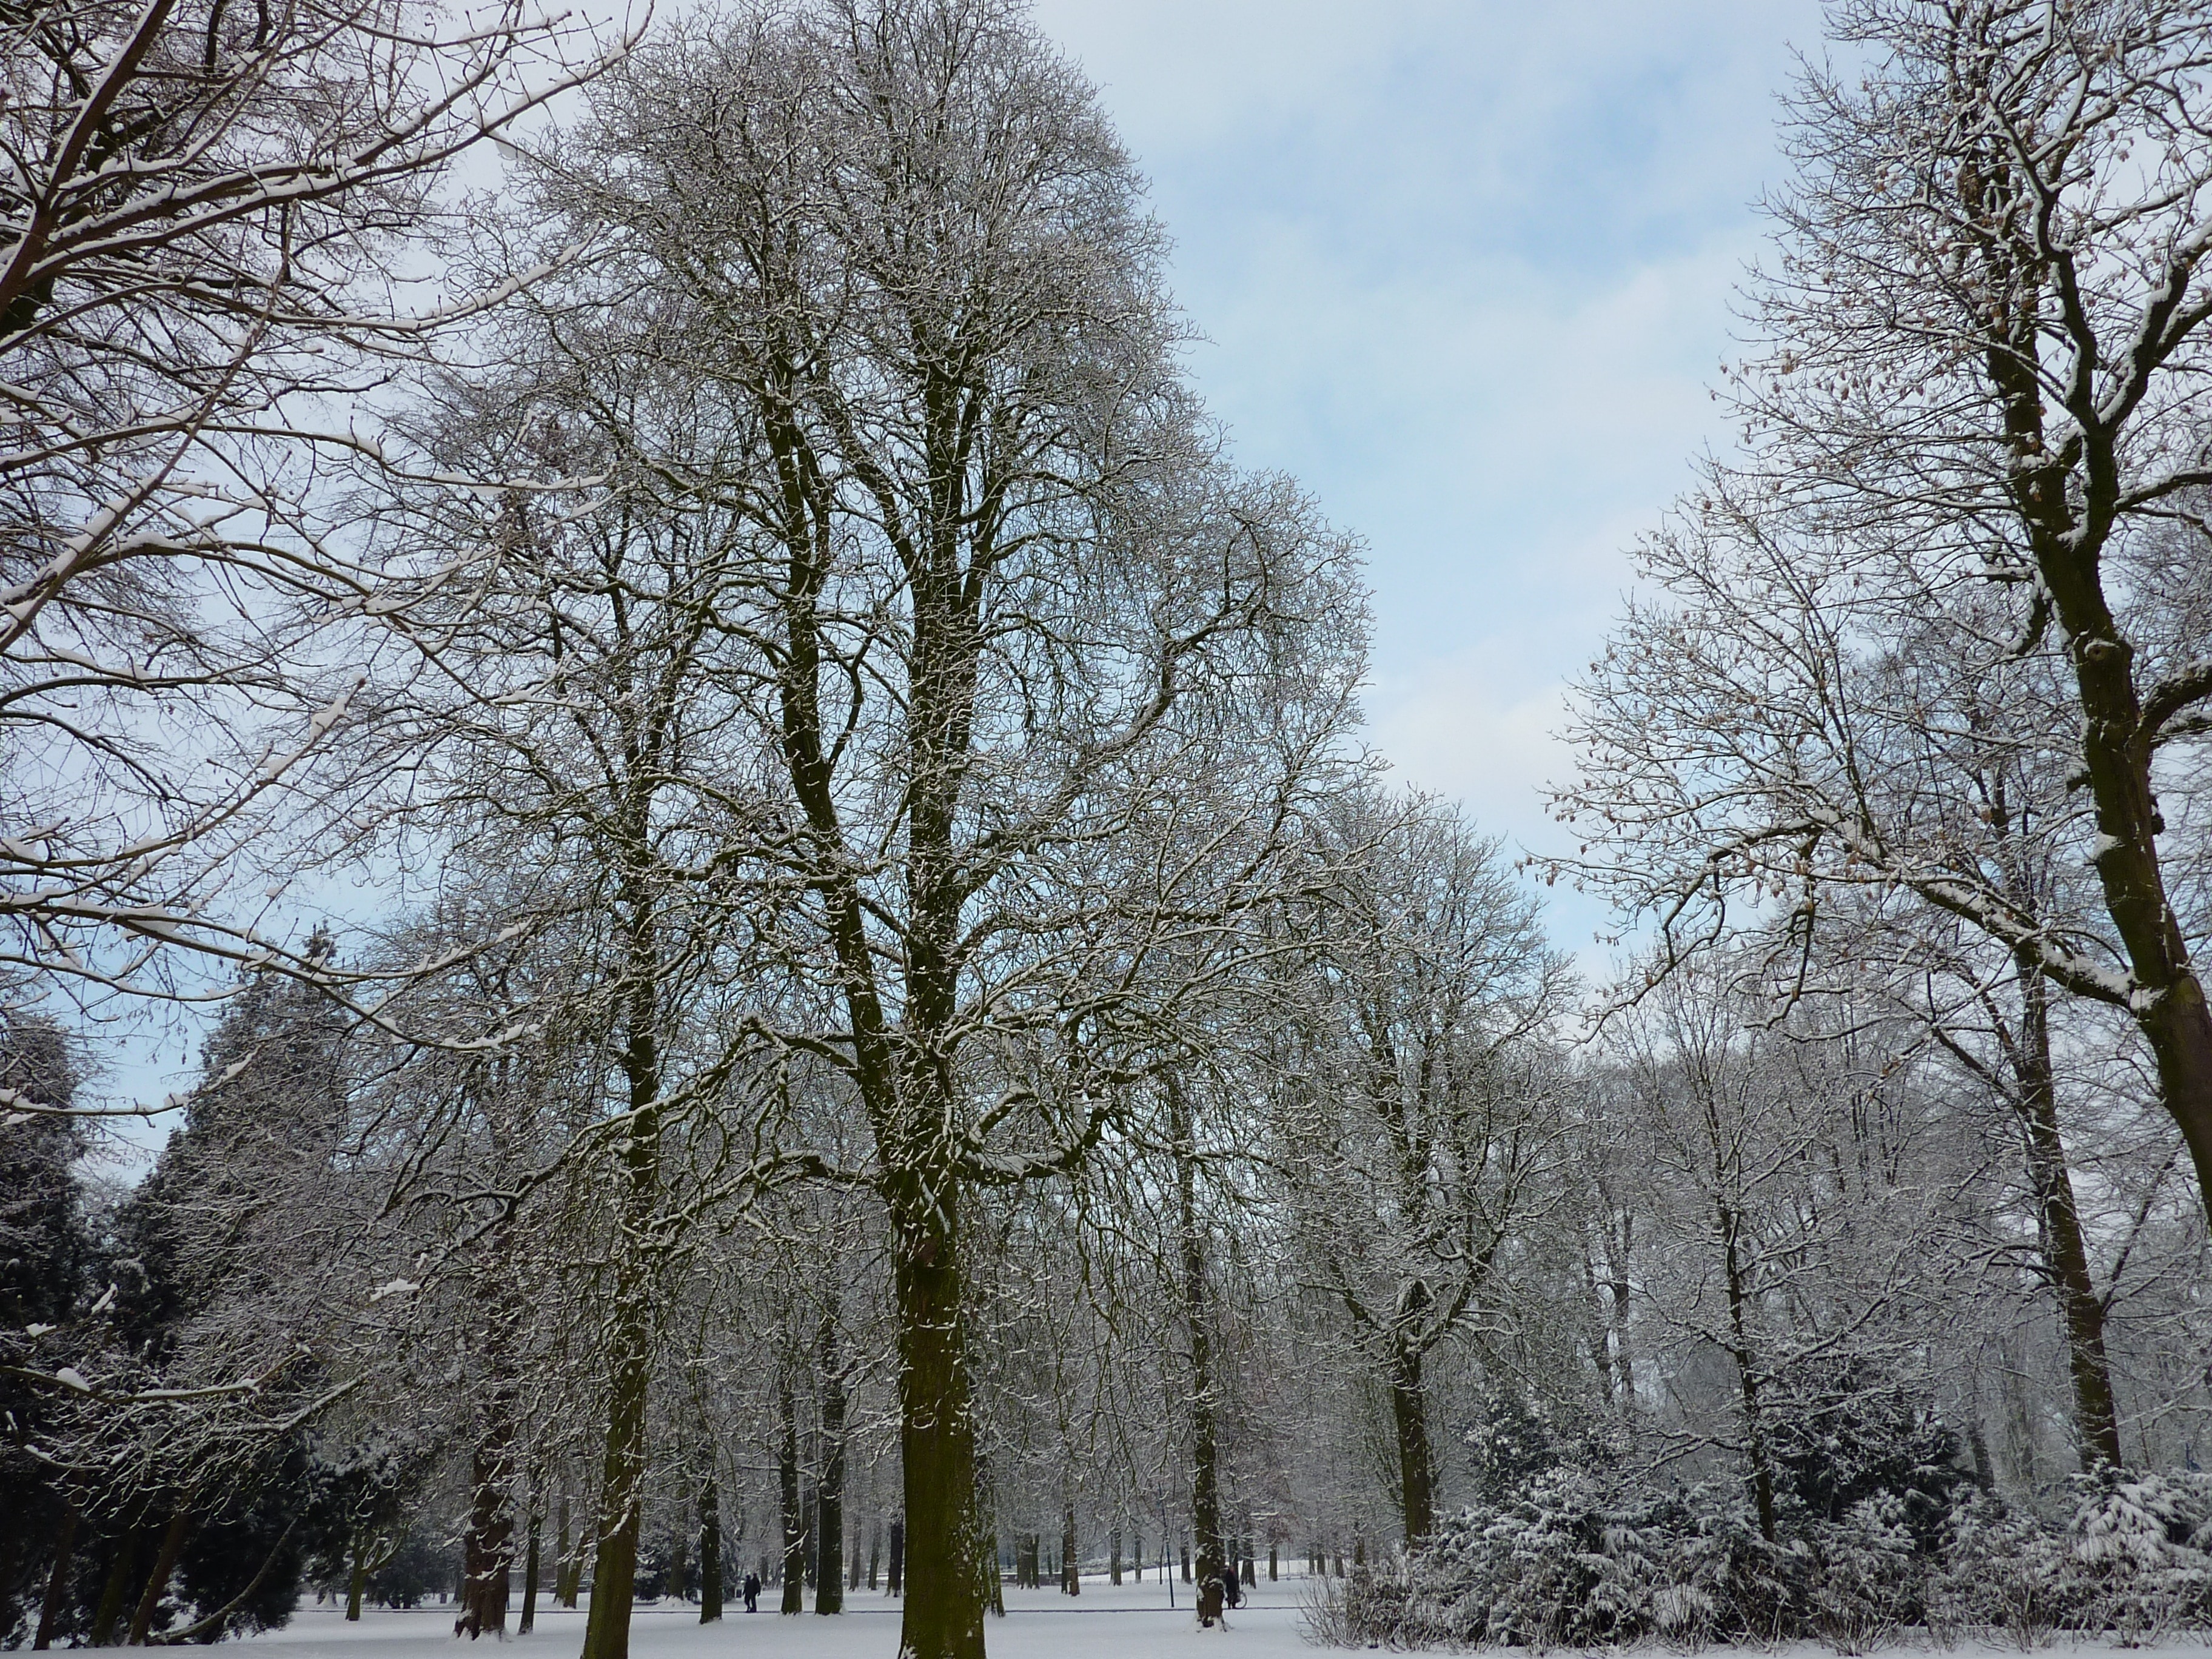 trees during winter season